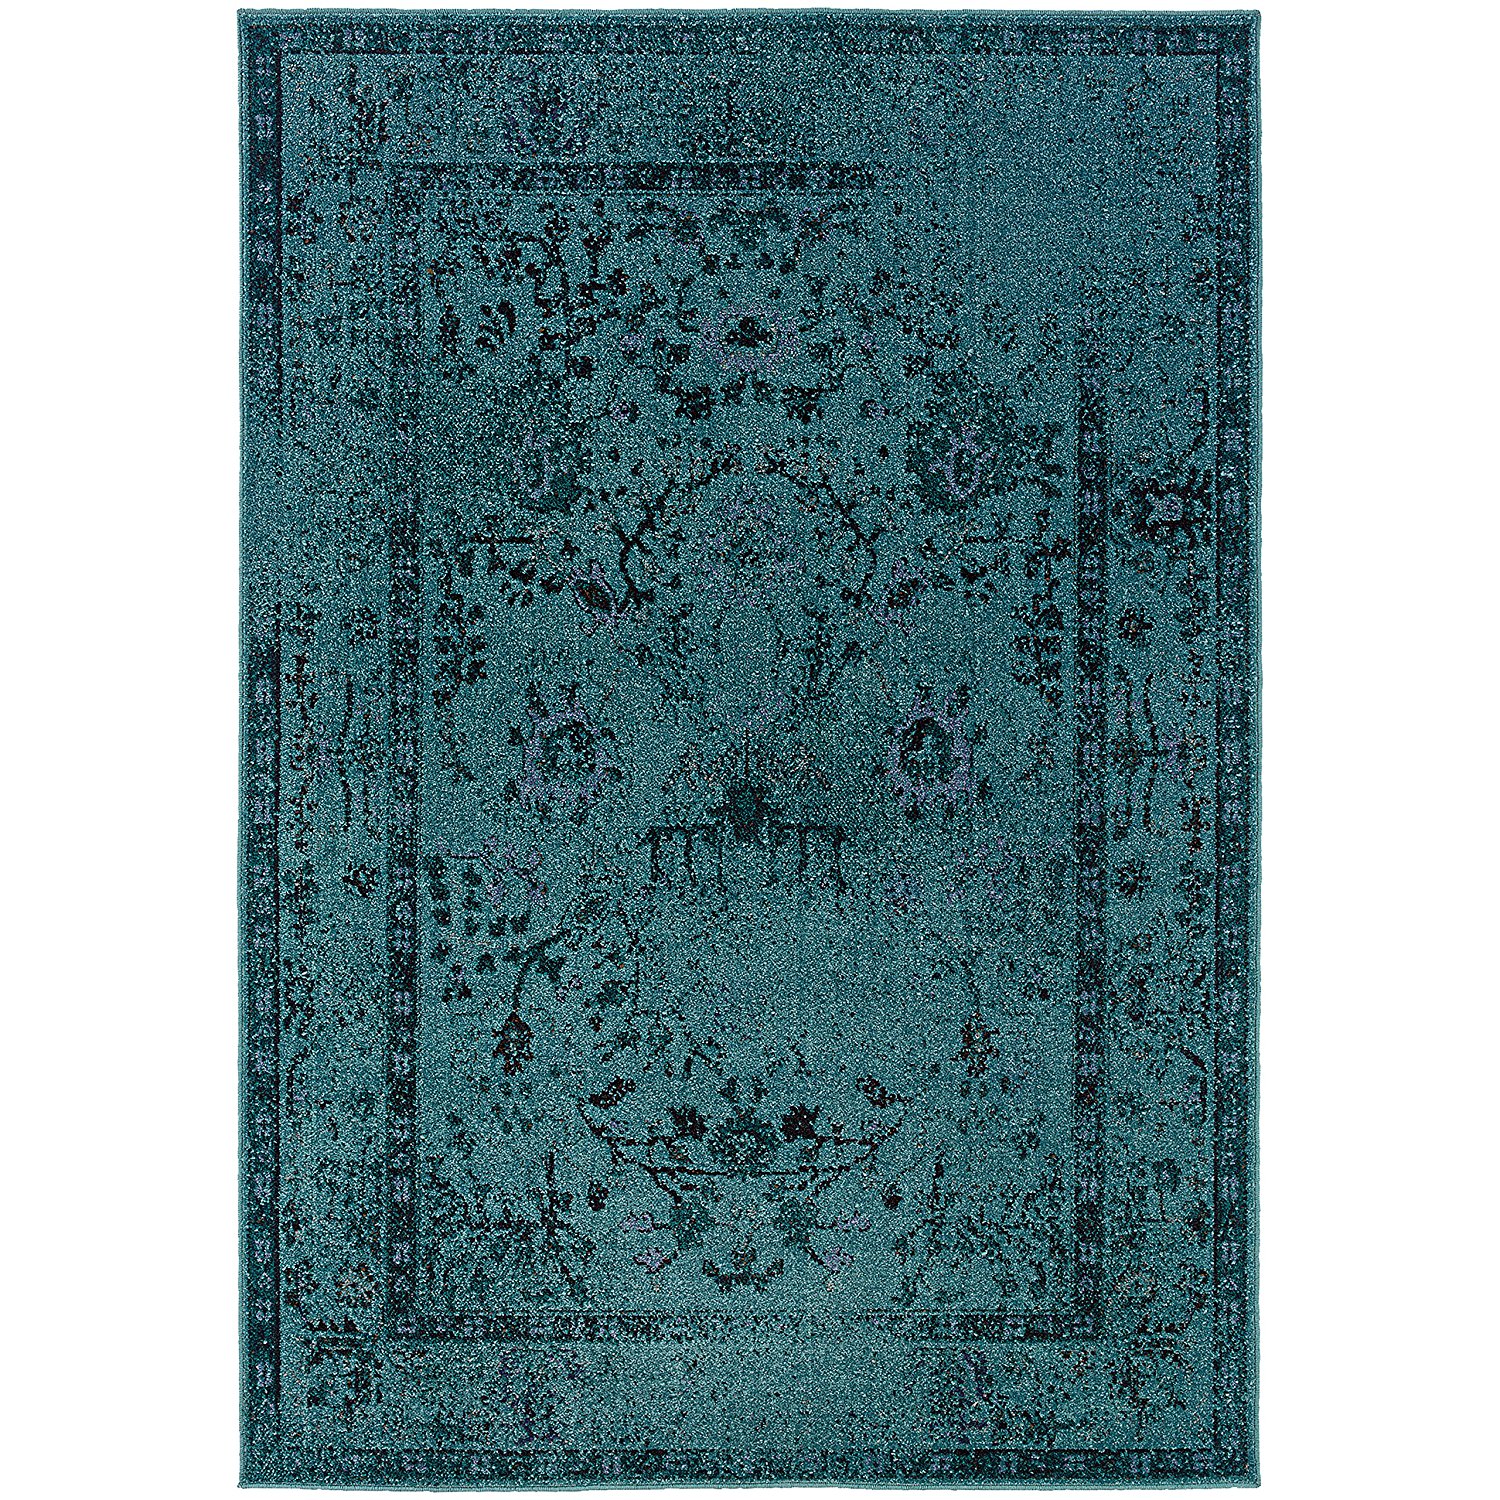 teal rugs amazon.com: oriental weavers revival 550h area rug 5u0027 3 x 7u00276 DKSPKTX